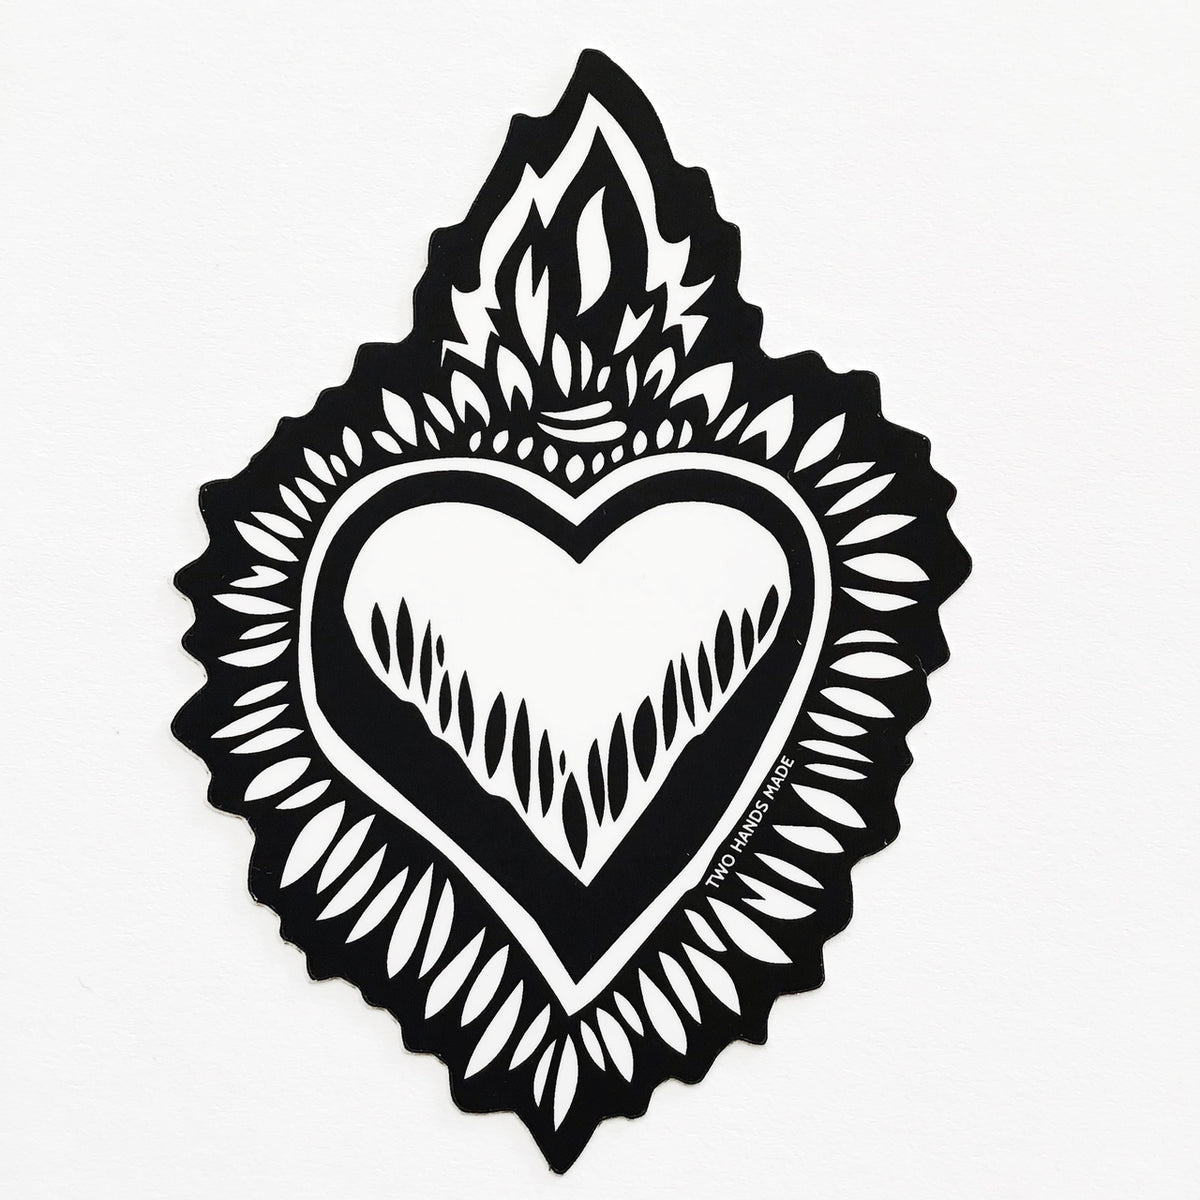 Flaming Heart Card